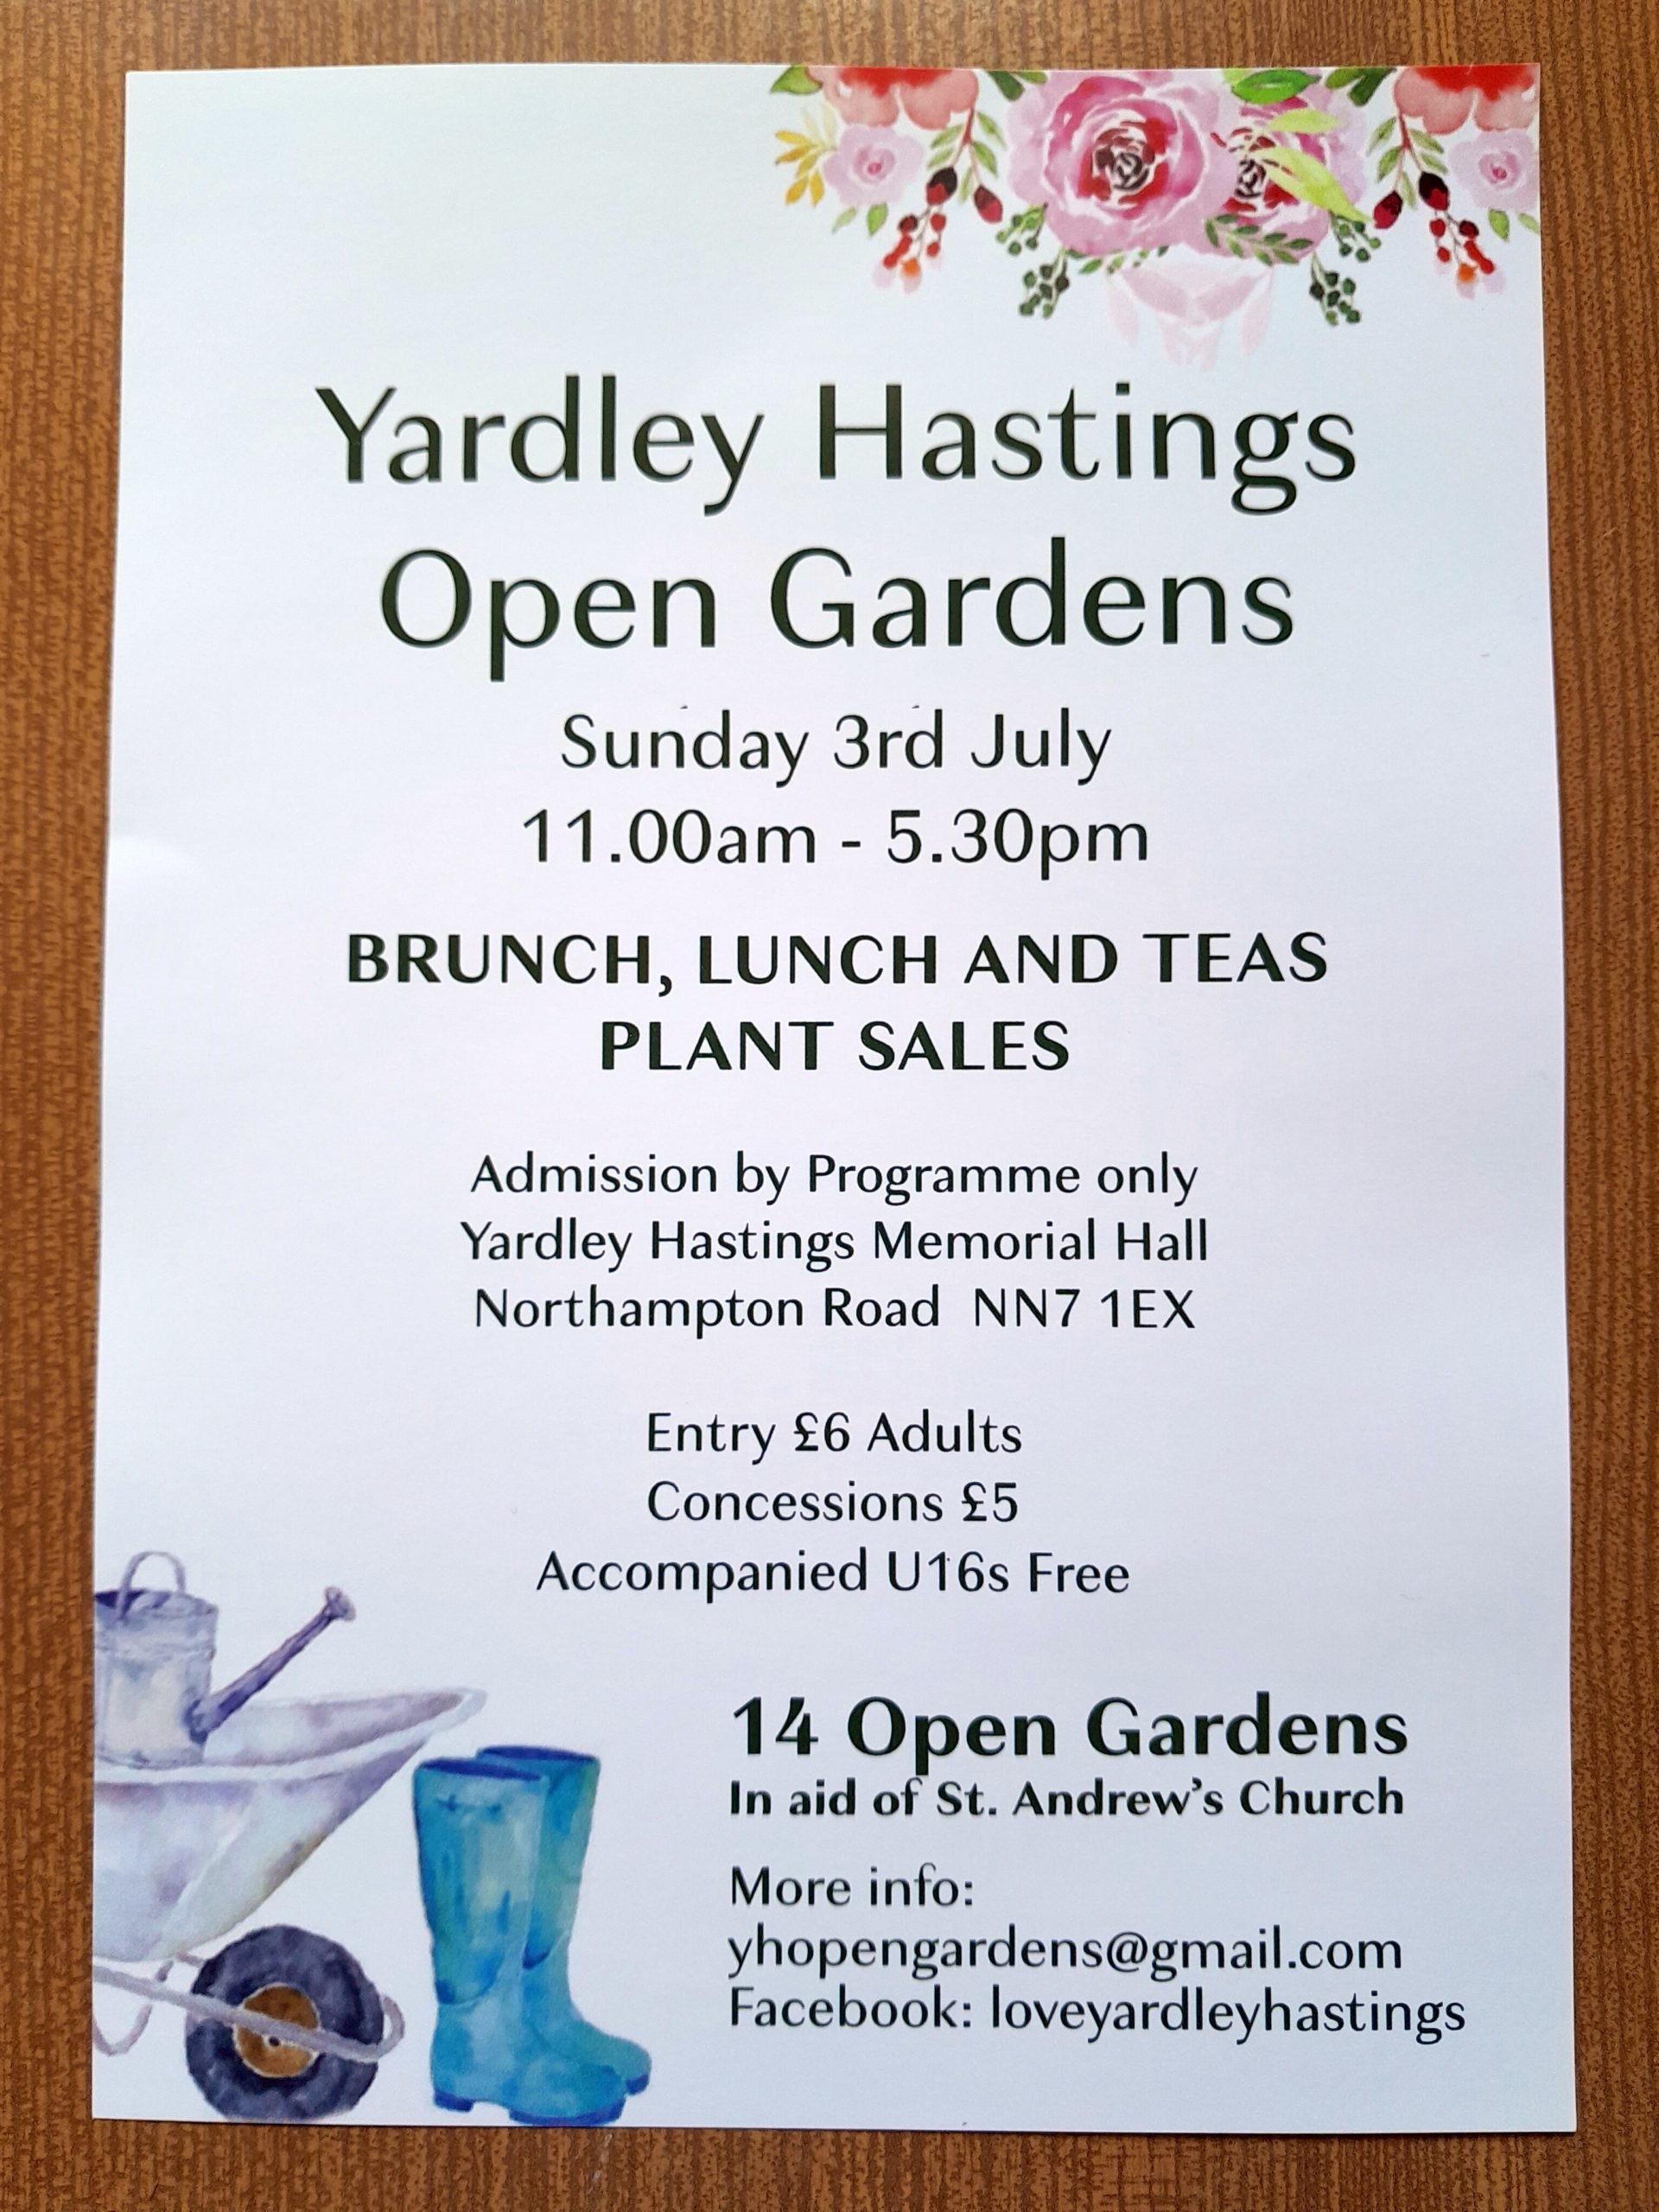 Yardley Hastings Open Gardens Top Image